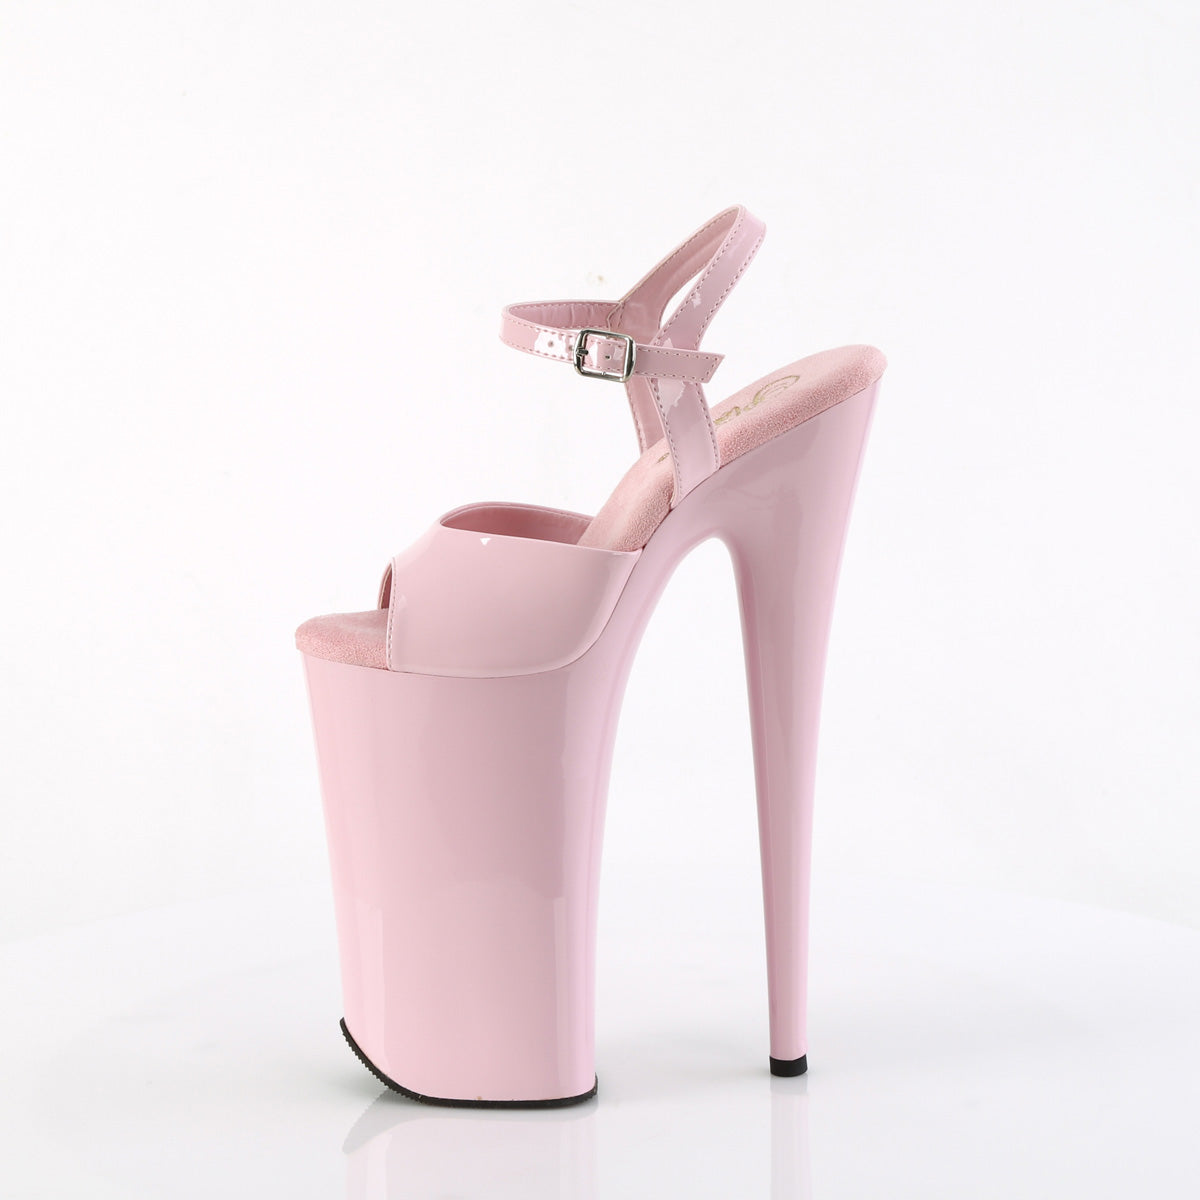 10 Inch Heel BEYOND-009 Baby Pink Patent